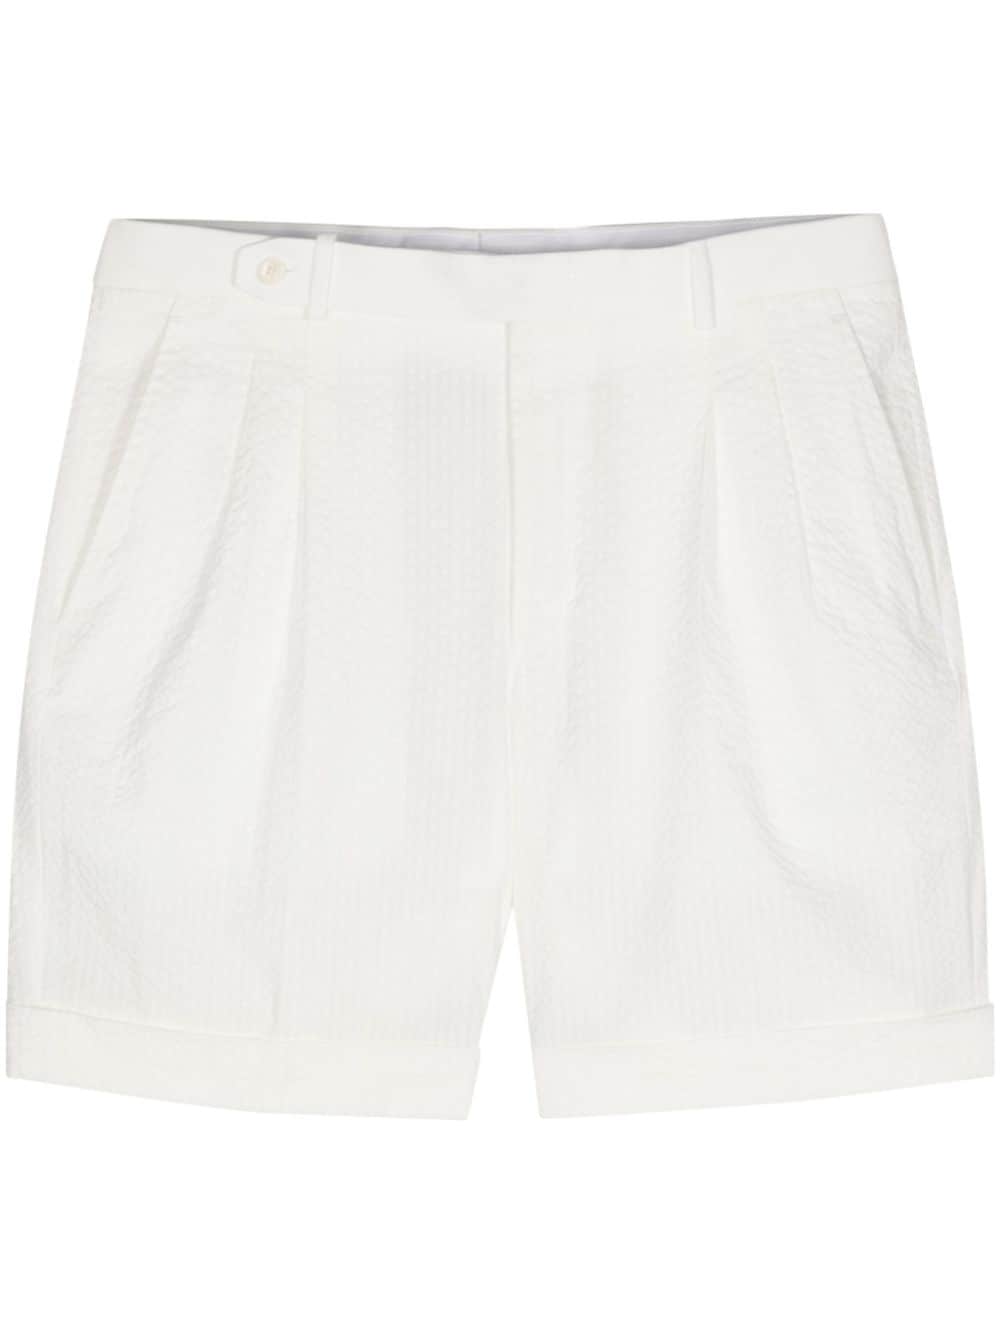 Brioni Seersucker Chino Shorts In White